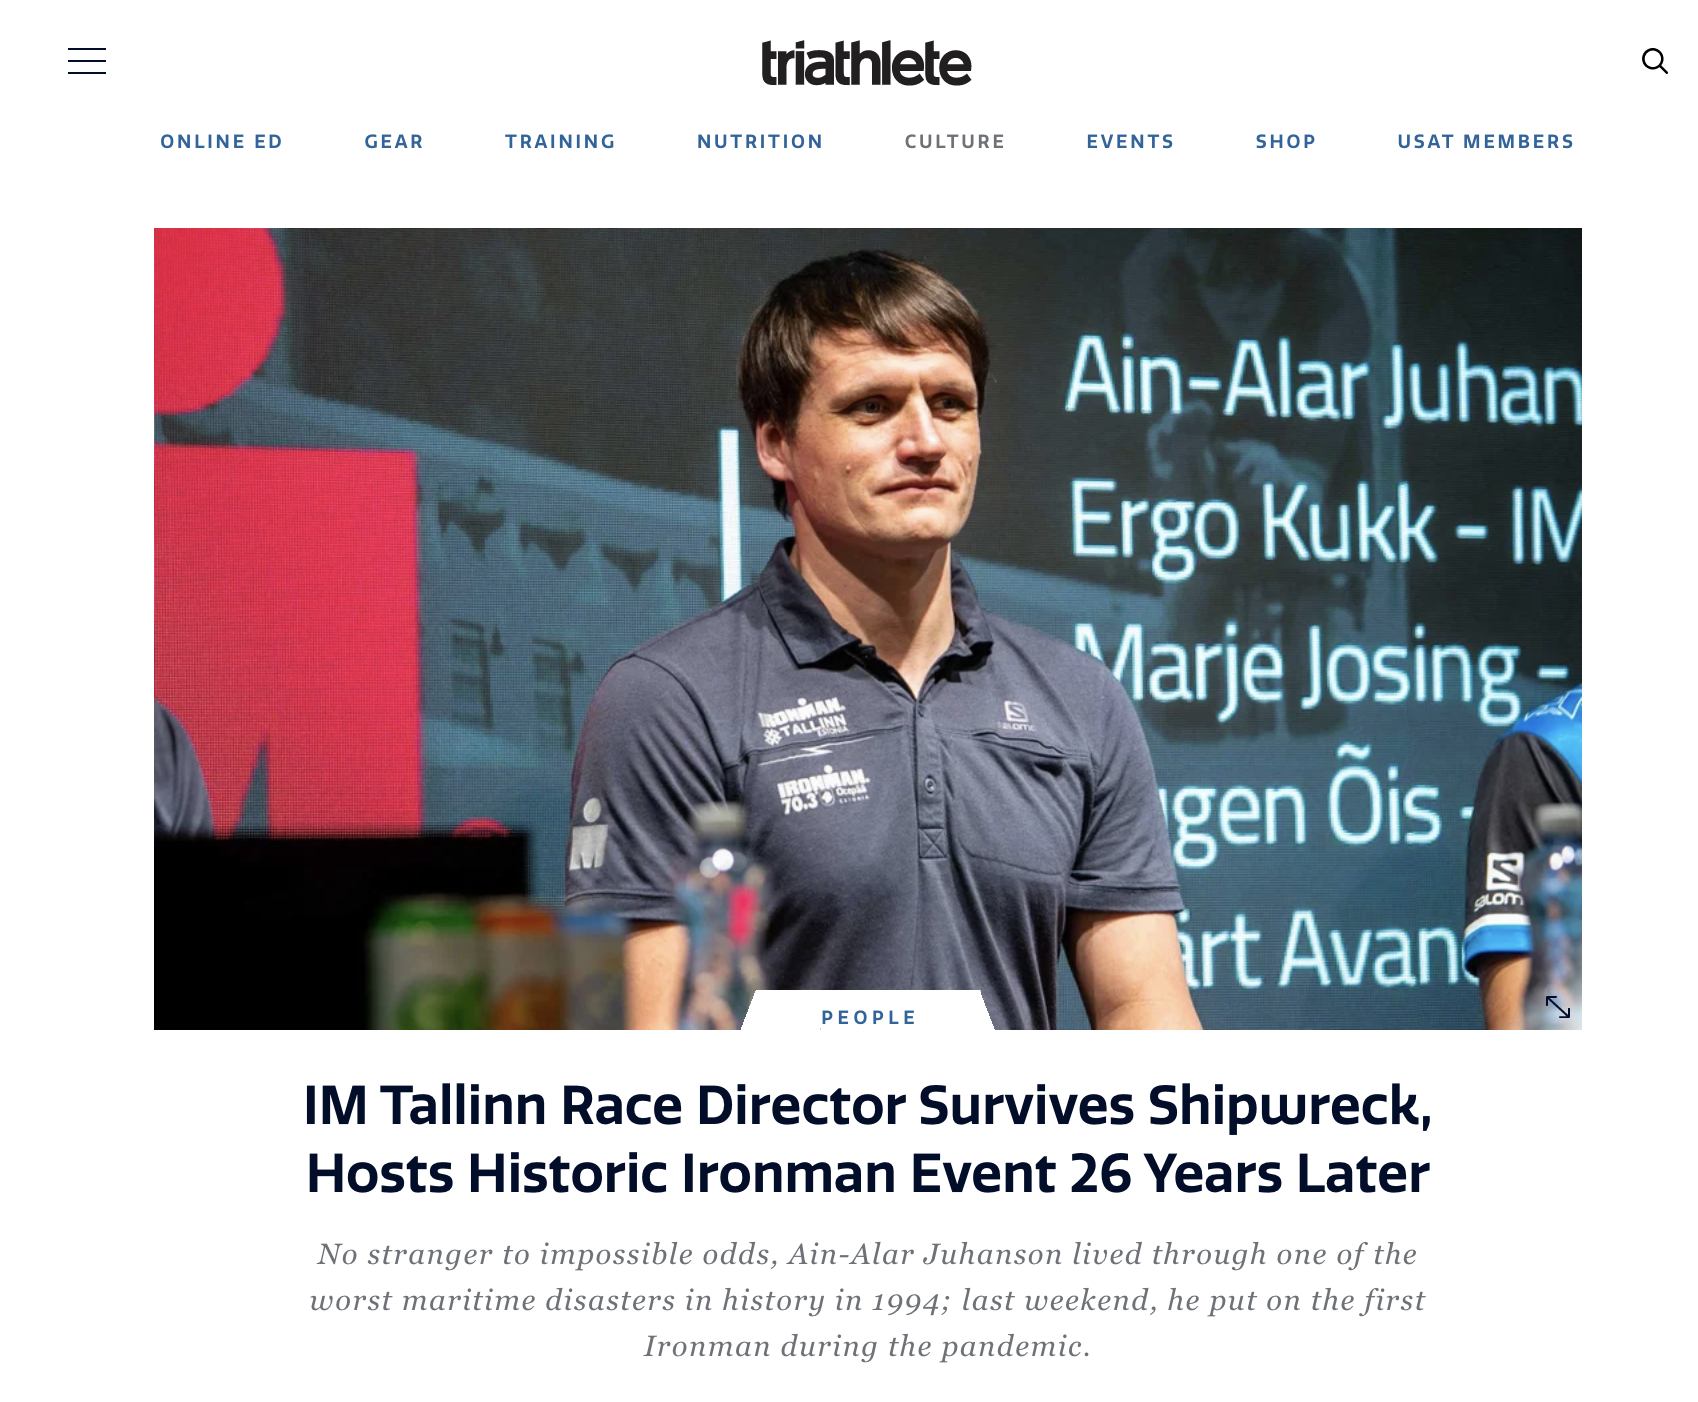 IM Tallinn Race Director Survives Shipwreck, Hosts Historic Ironman Event 26 Years Later